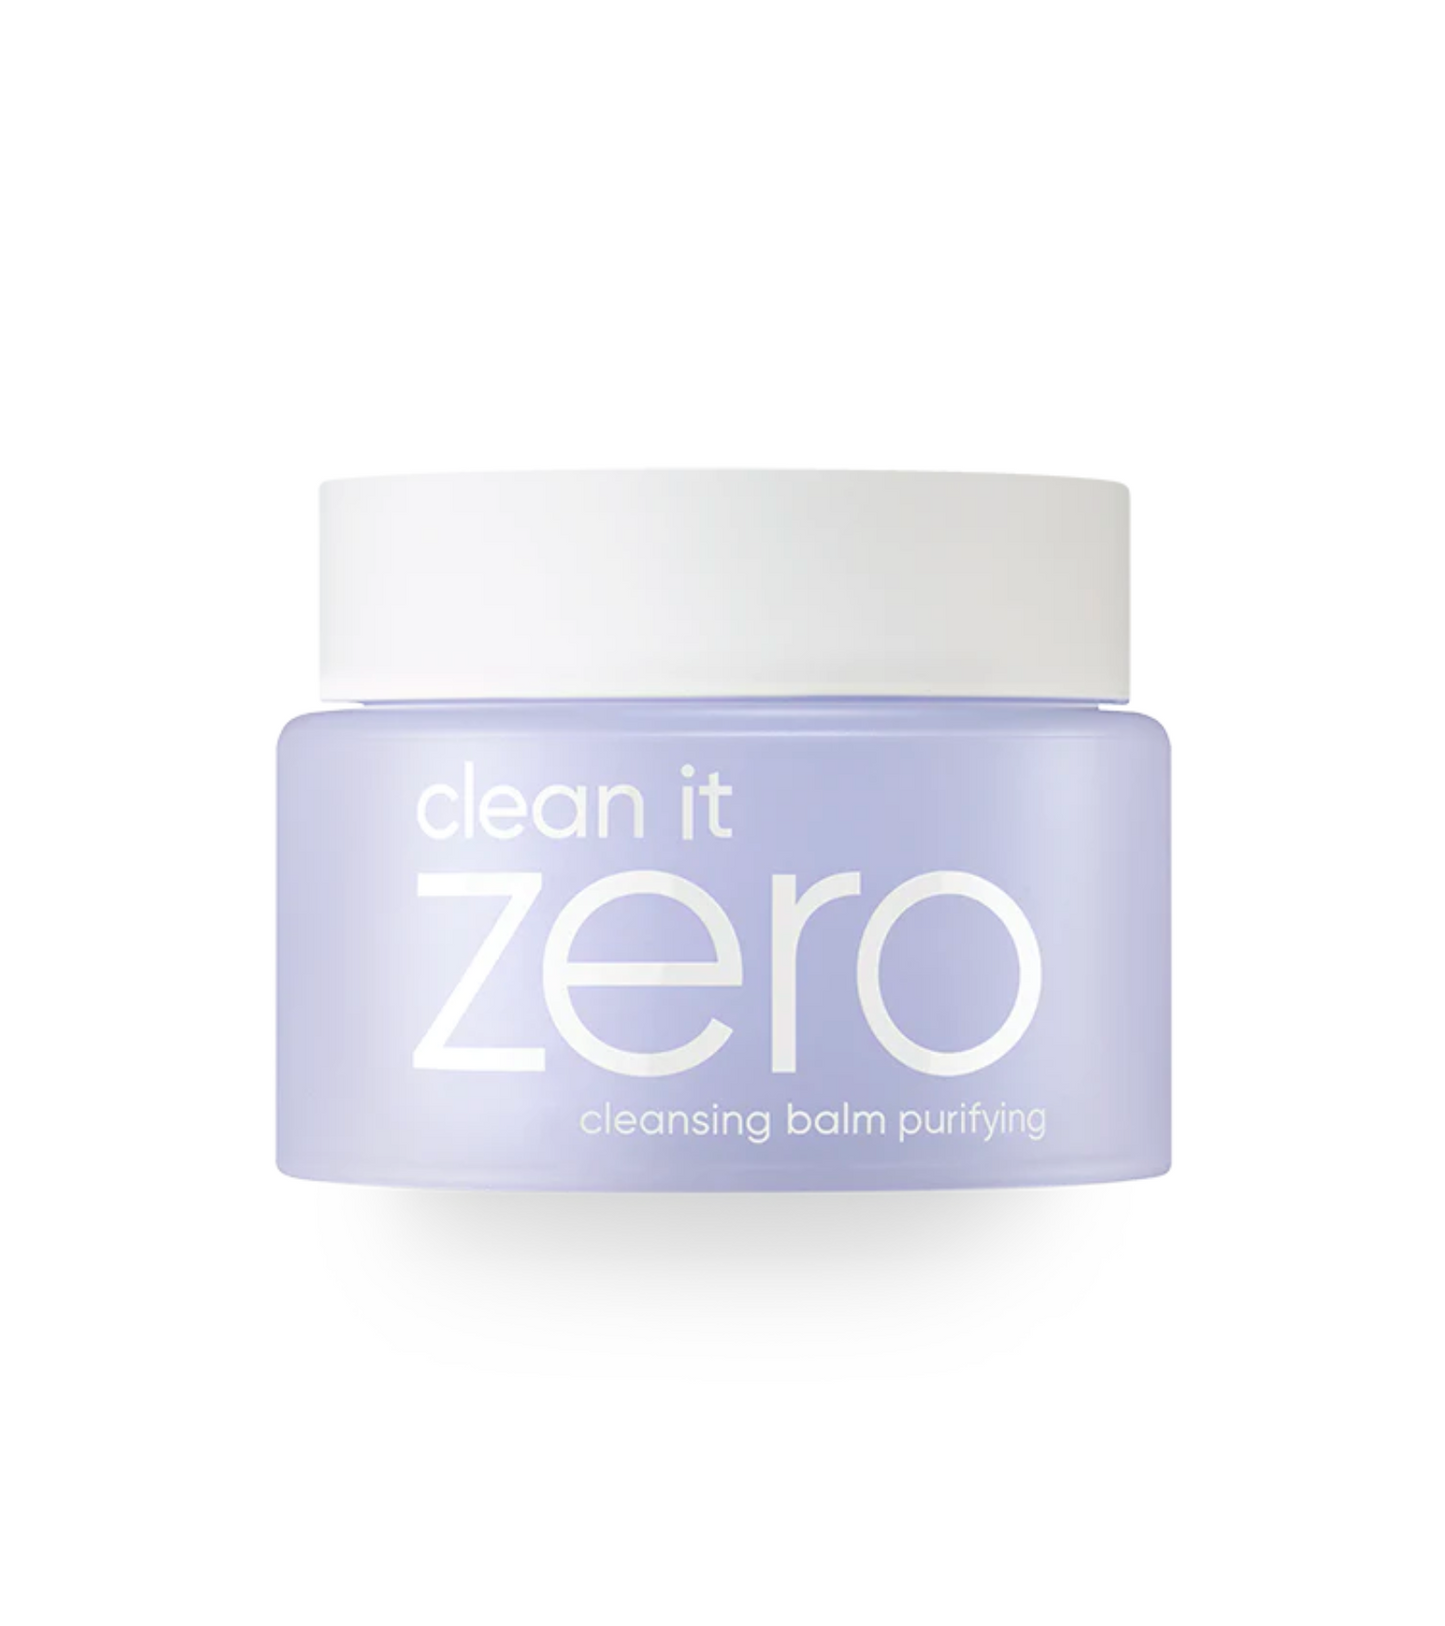 Clean it Zero Cleansing Balm Purifying - Sensitive Skin